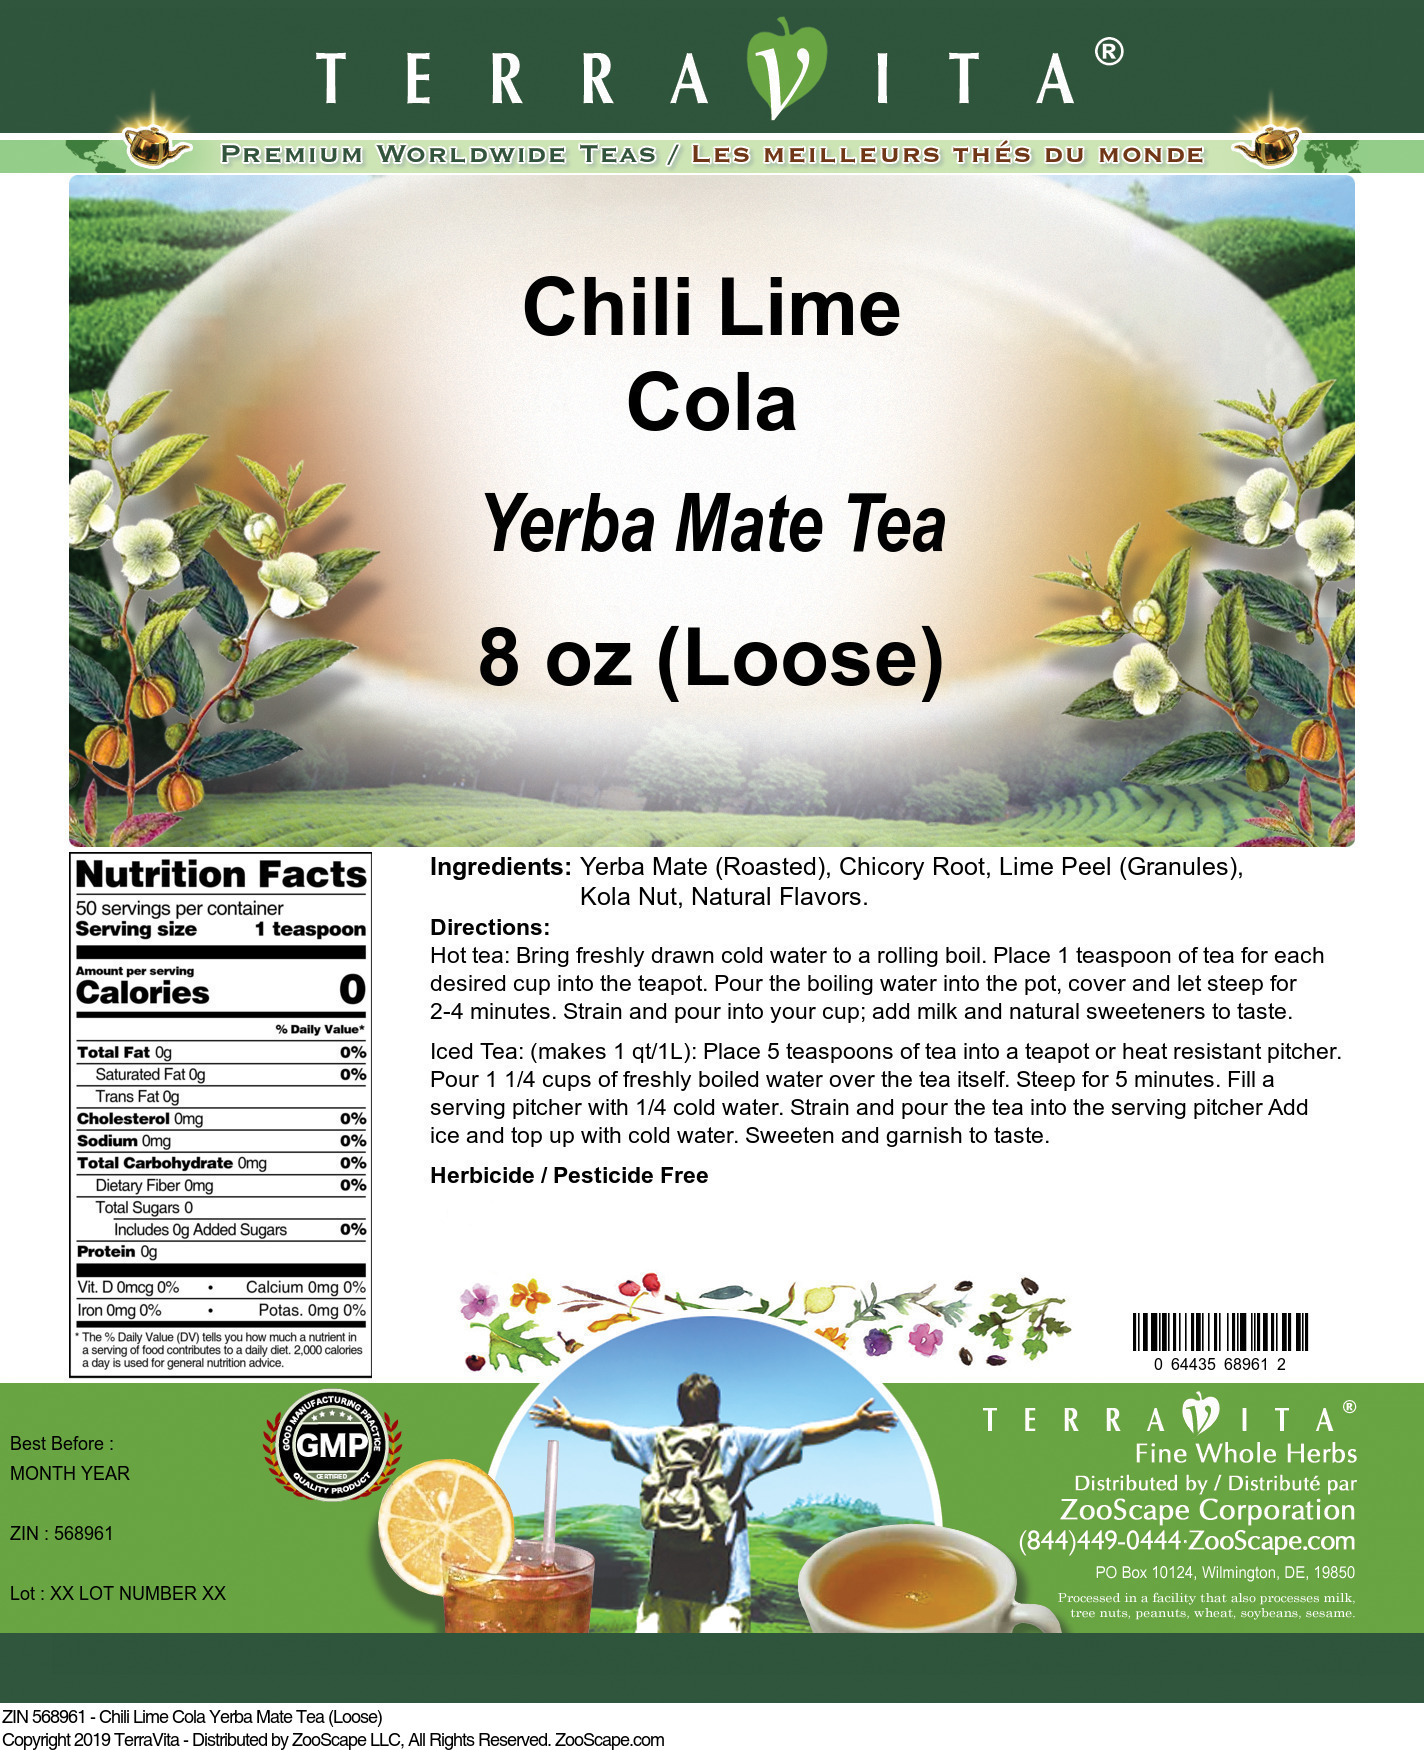 Chili Lime Cola Yerba Mate Tea (Loose) - Label